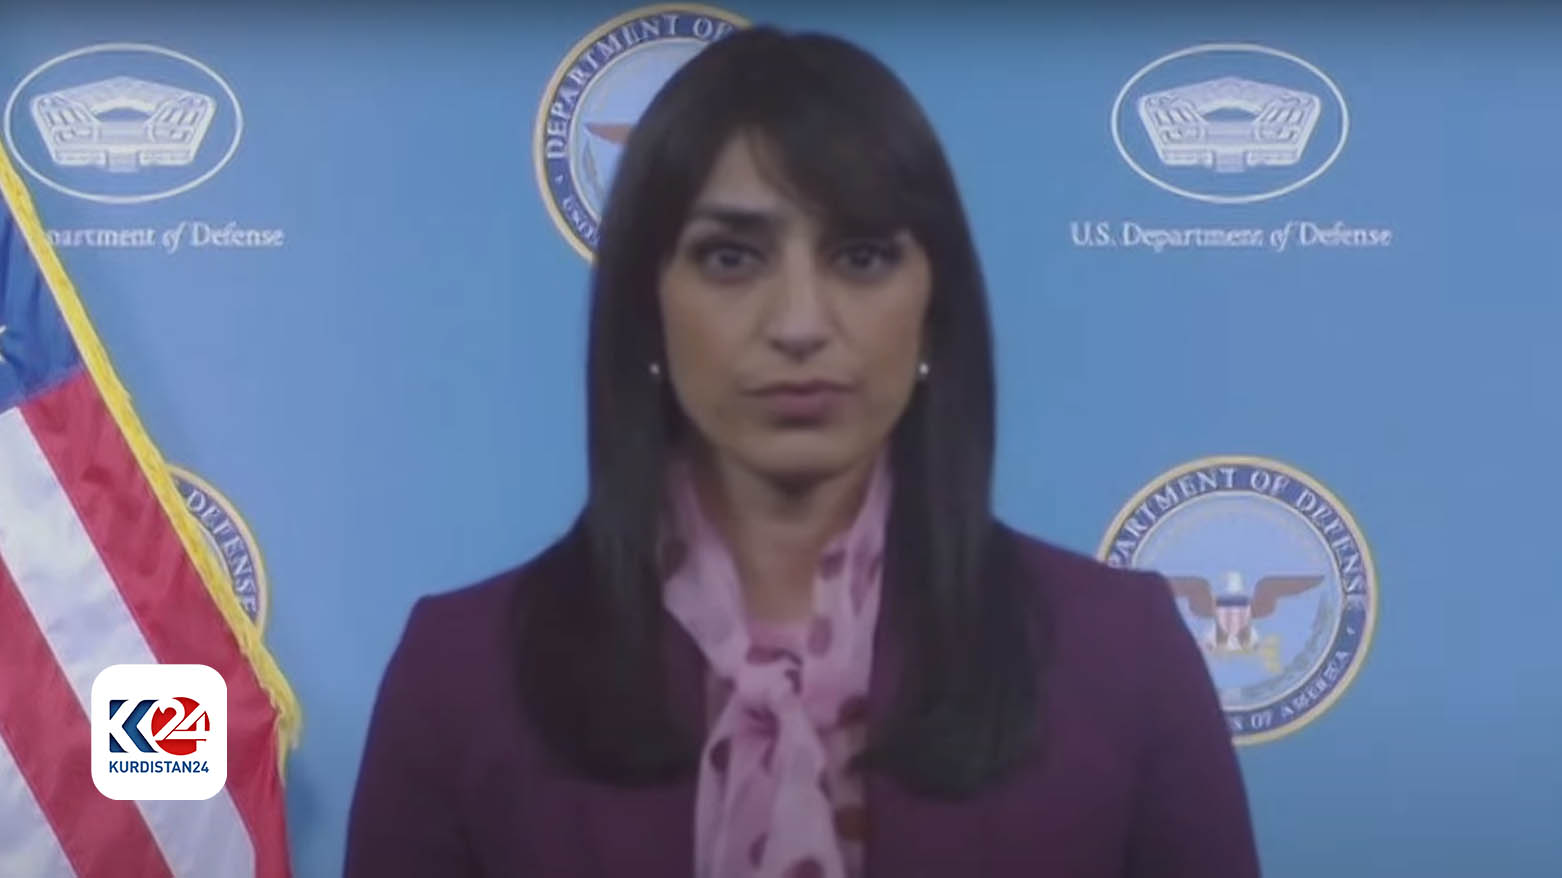 سابرینا سینگ بۆ کوردستان24: تا داعش هەبێت ئەرکی هێزەکانی ئەمەریکا لە عێراق بەردەوام دەبێت